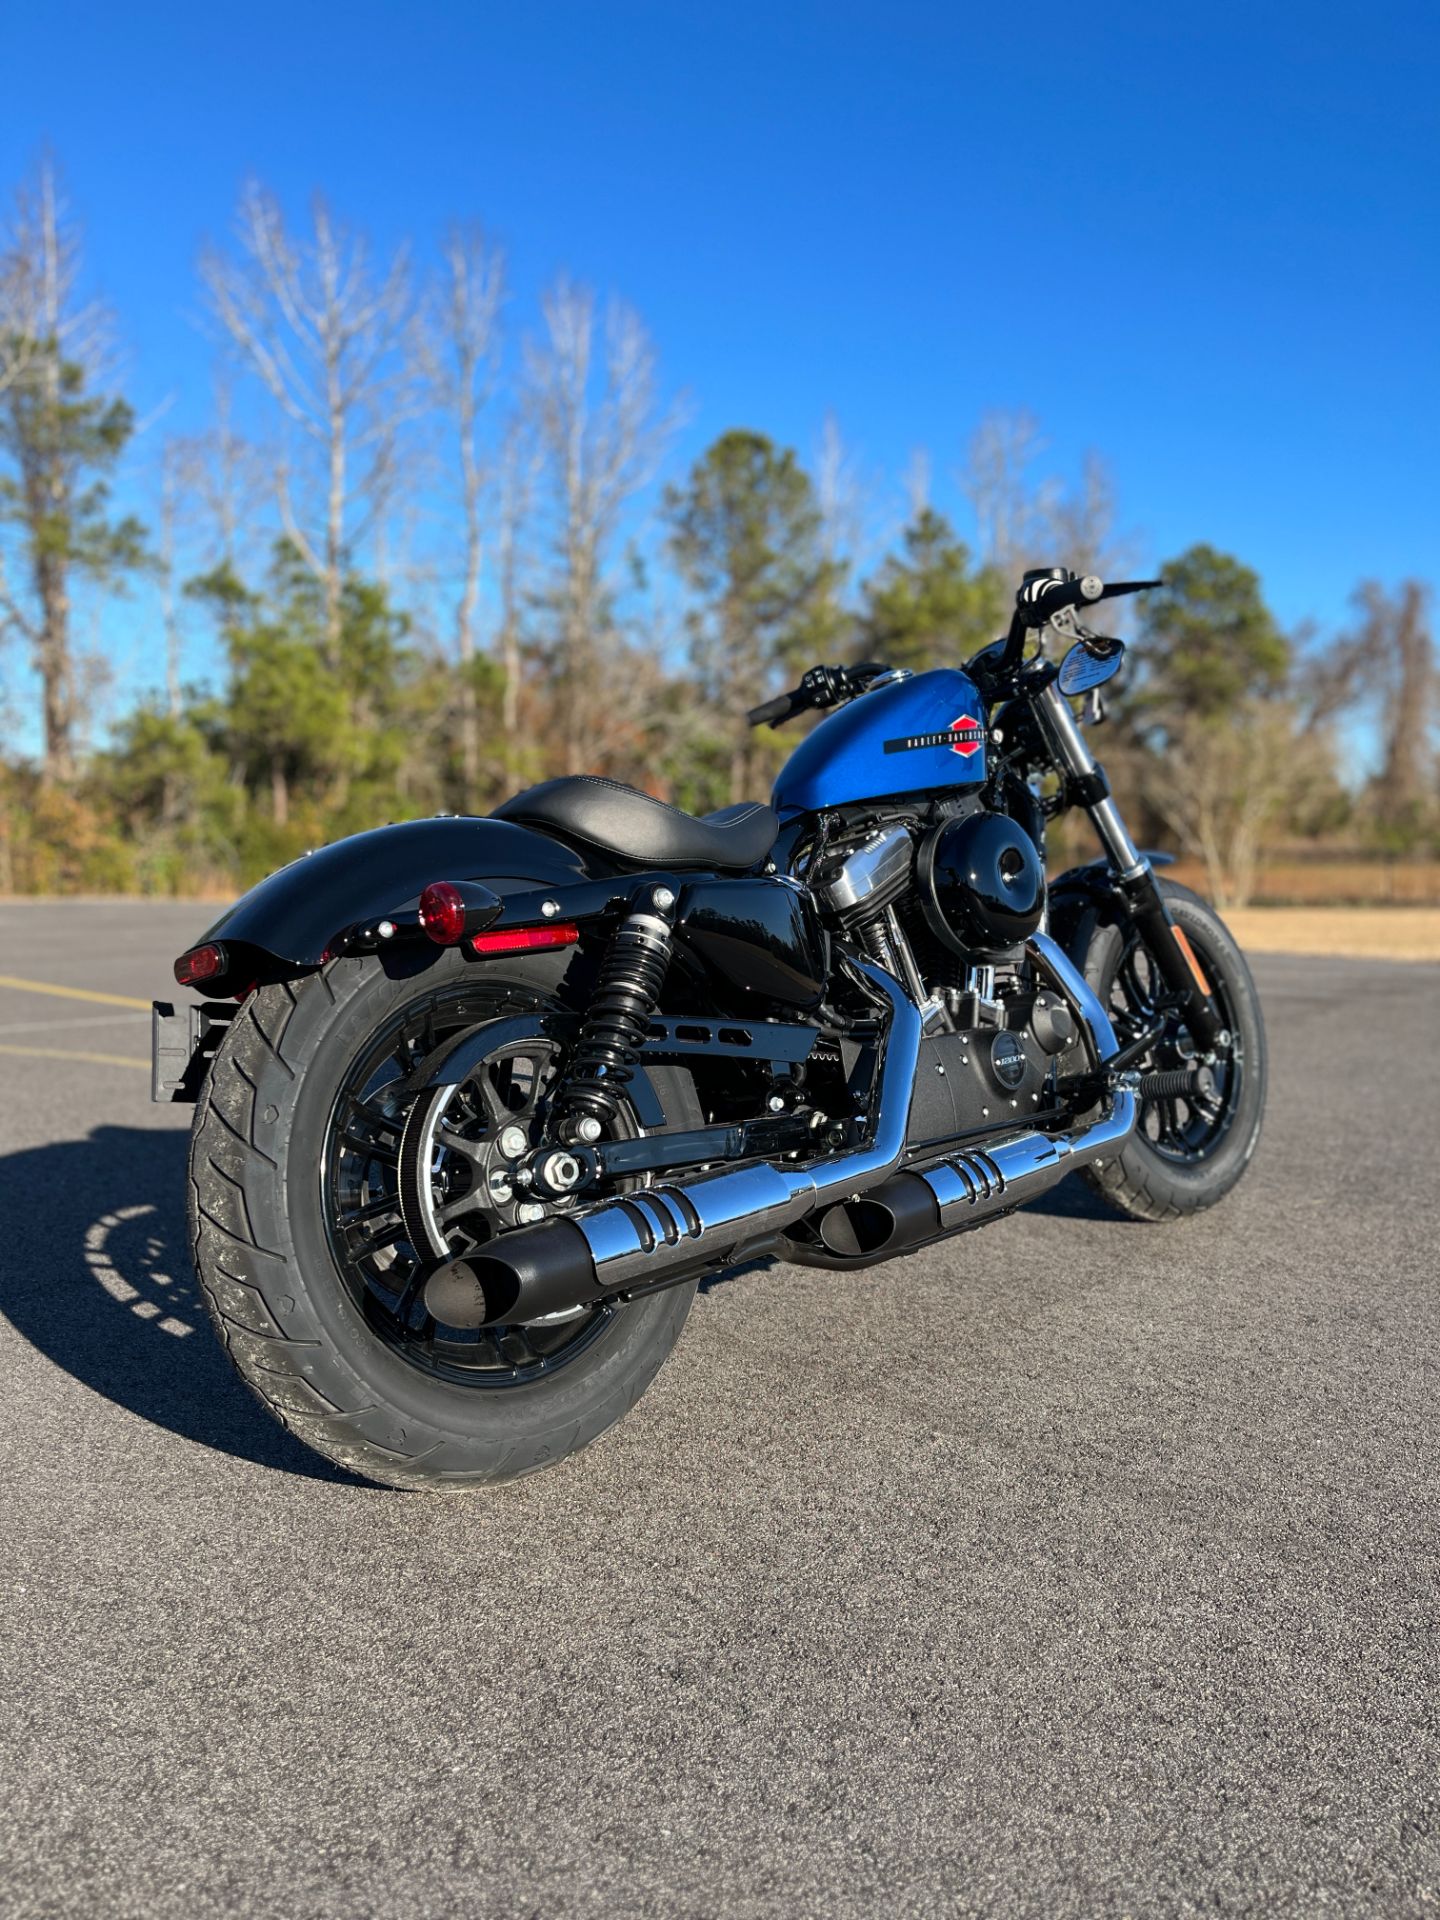 2022 Harley-Davidson Forty-Eight® in Jacksonville, North Carolina - Photo 5